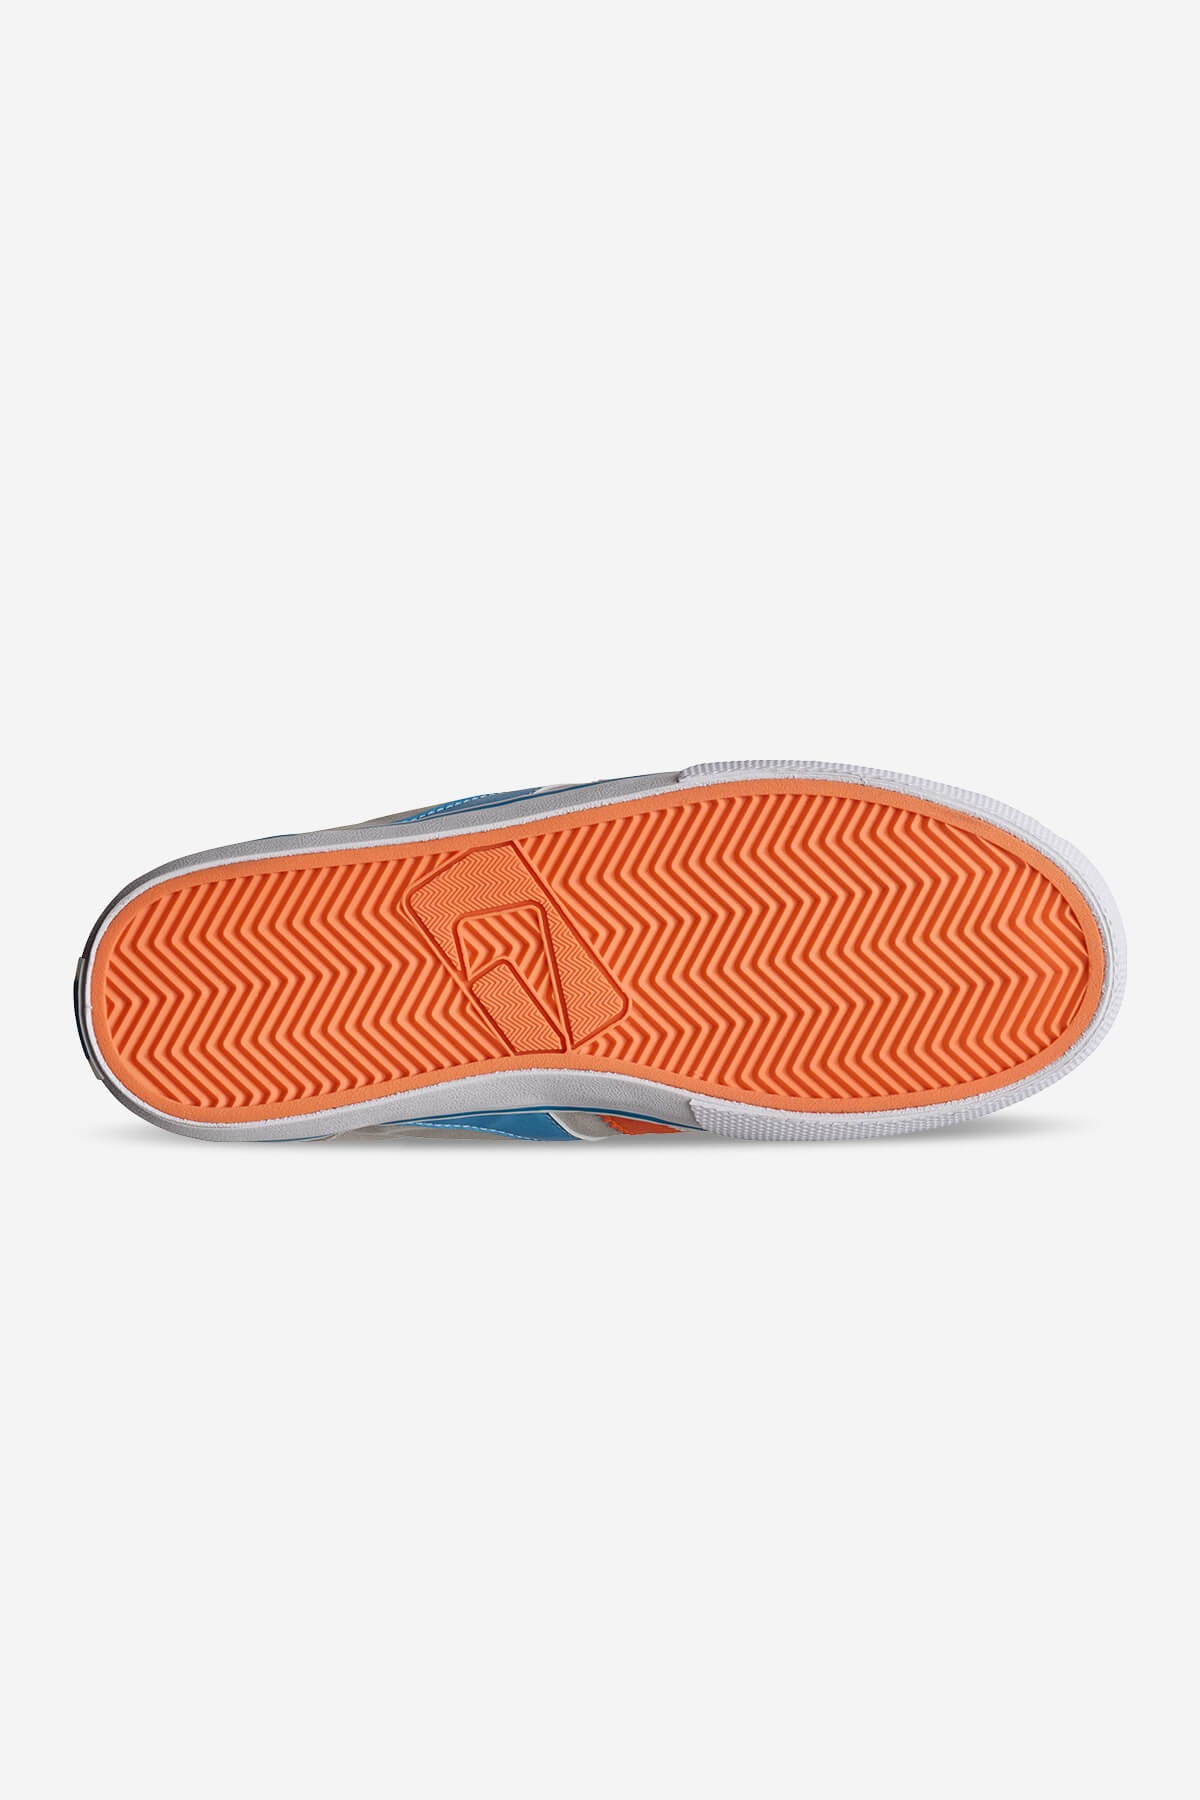 Globe - Encore 2 - Cloud/Blue/Orange - skateboard Chaussures